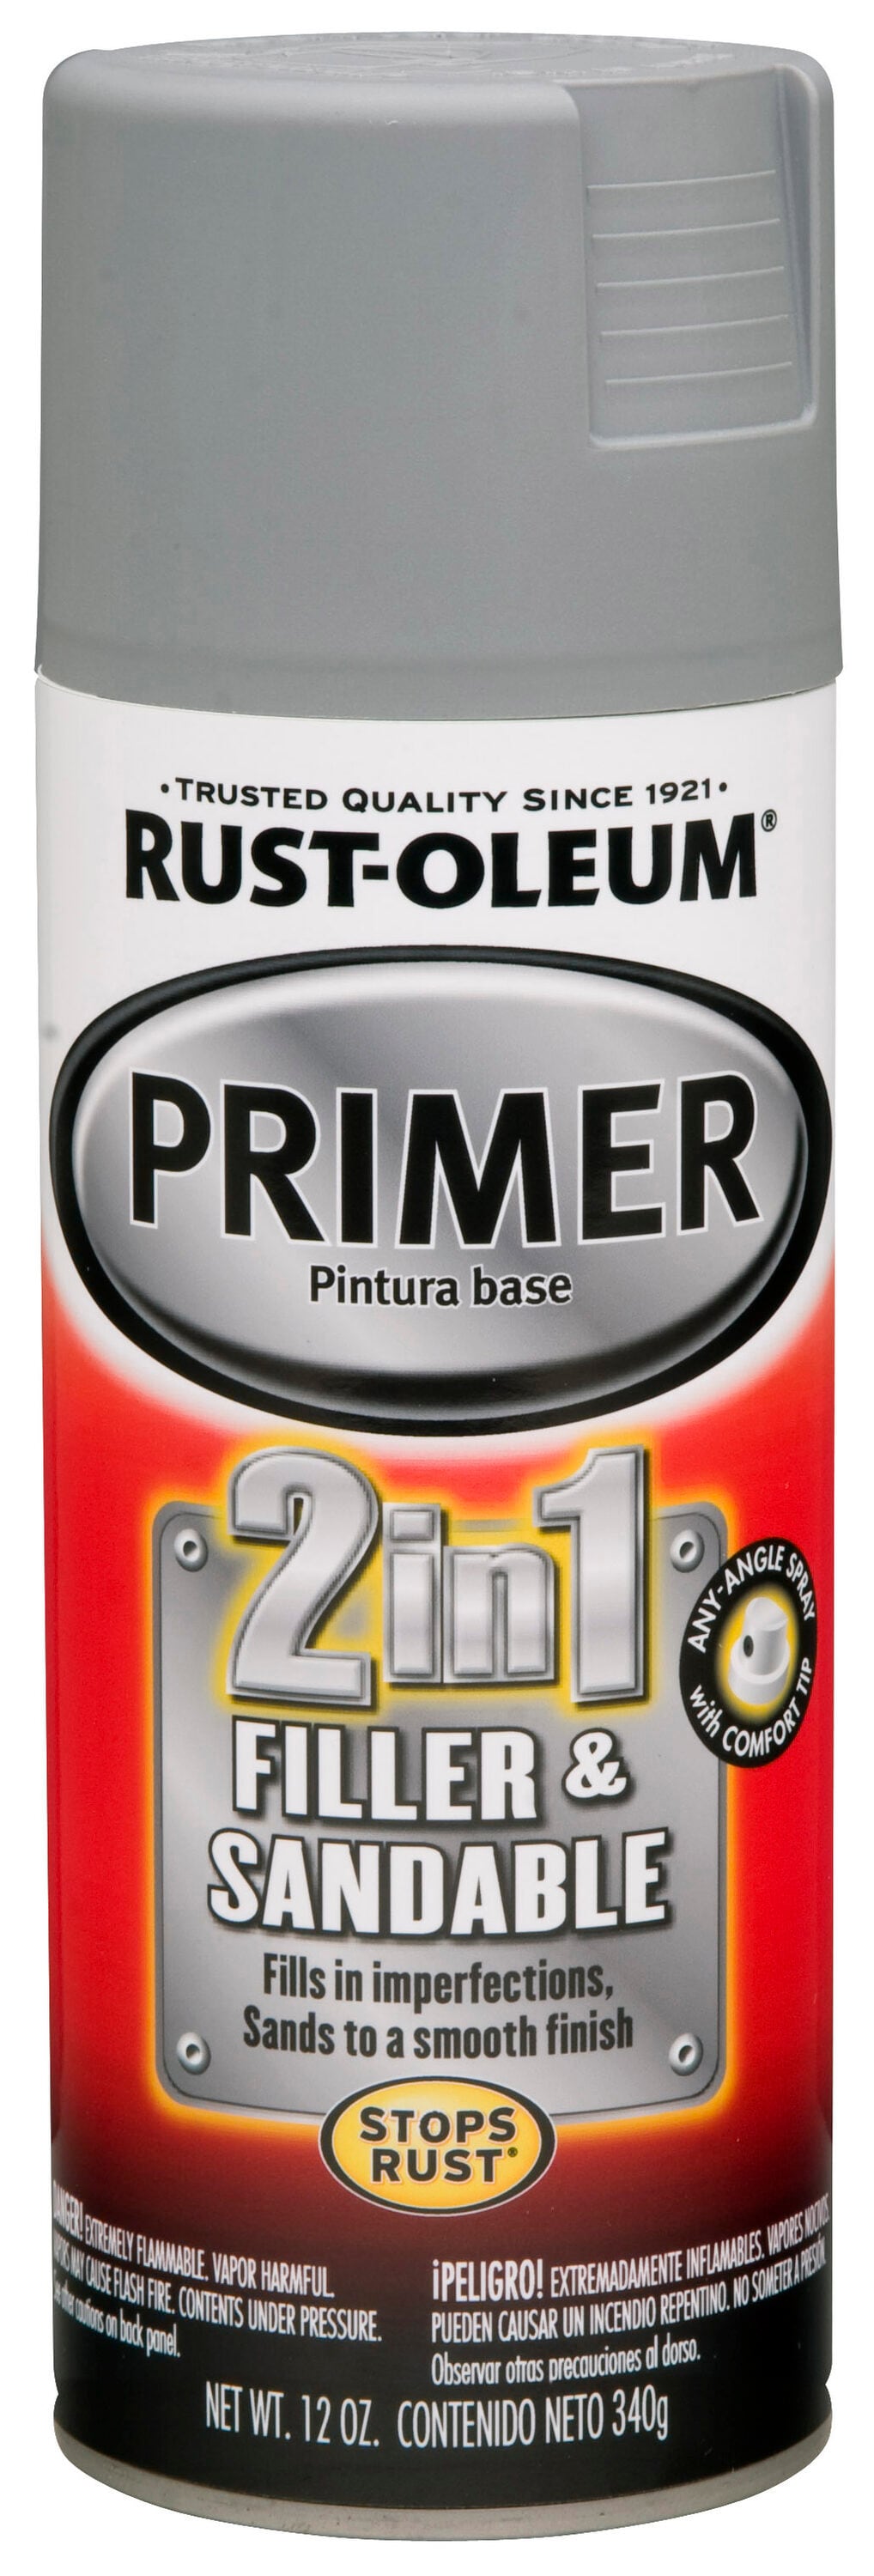 Rust-Oleum® Stops Rust® Light Gray Automotive Primer Spray - 12 oz. at  Menards®